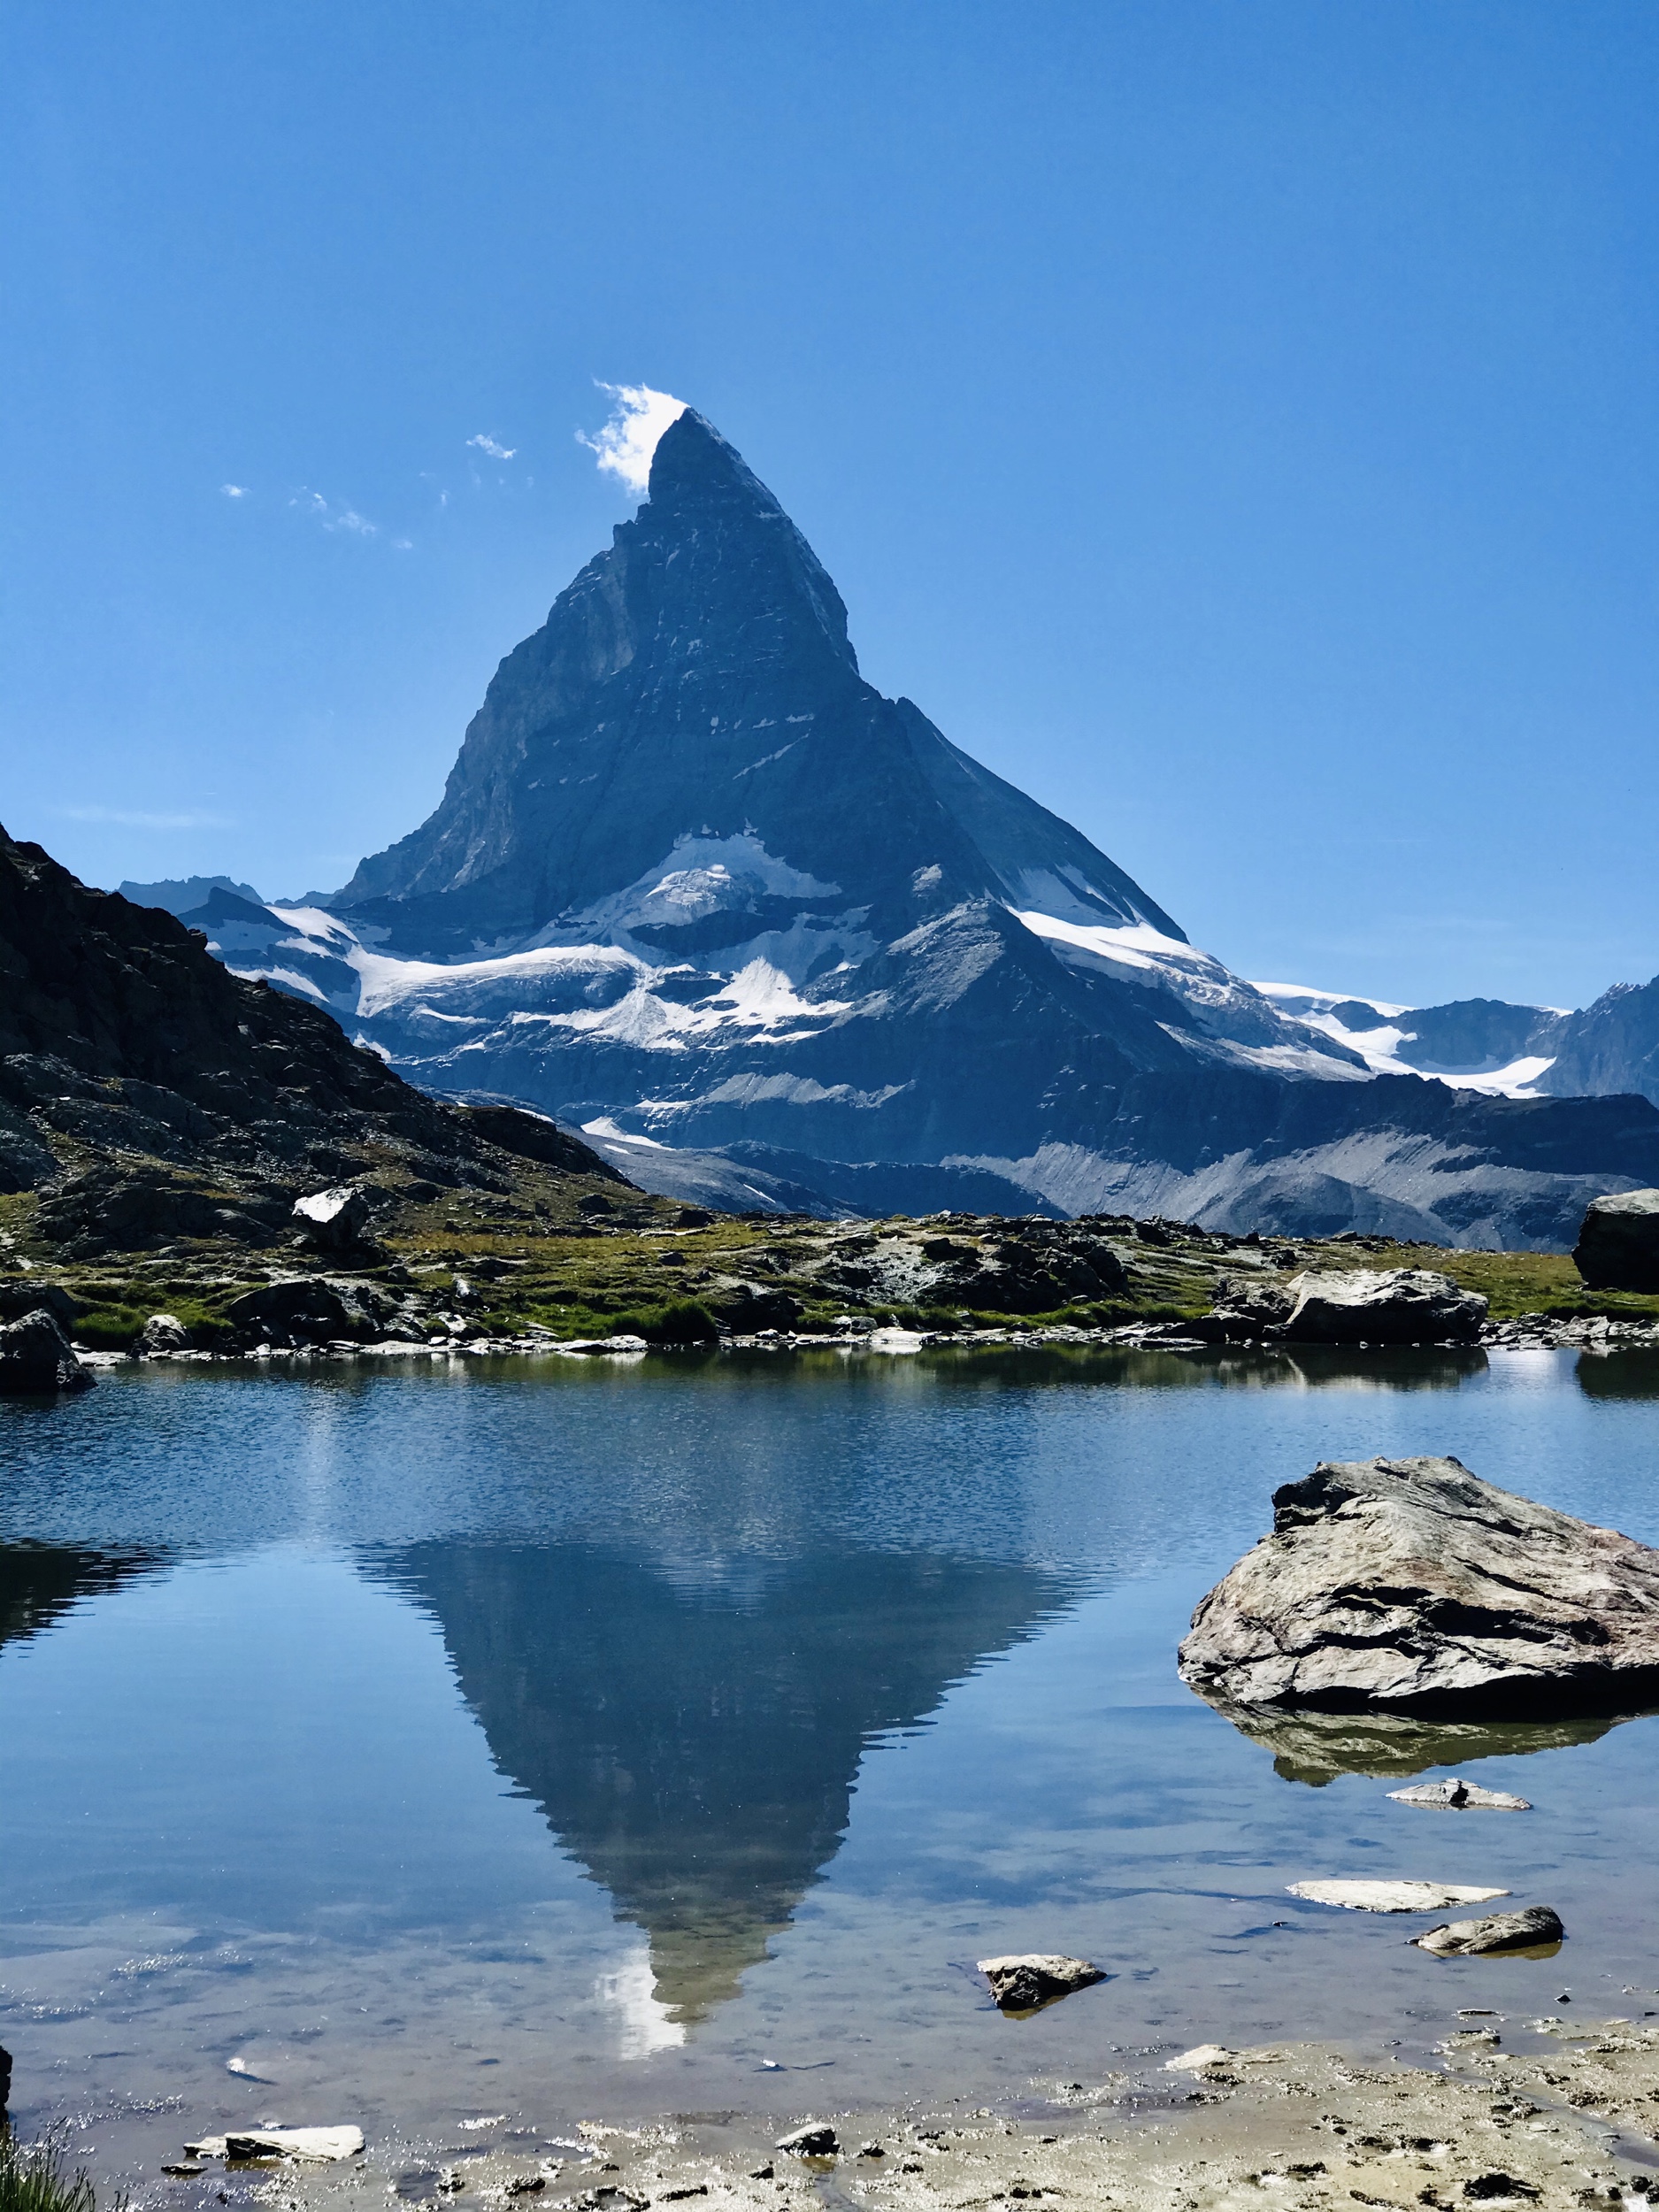 The most scenic Matterhorn hike - Zermatt - hiking with Sweettravelbee